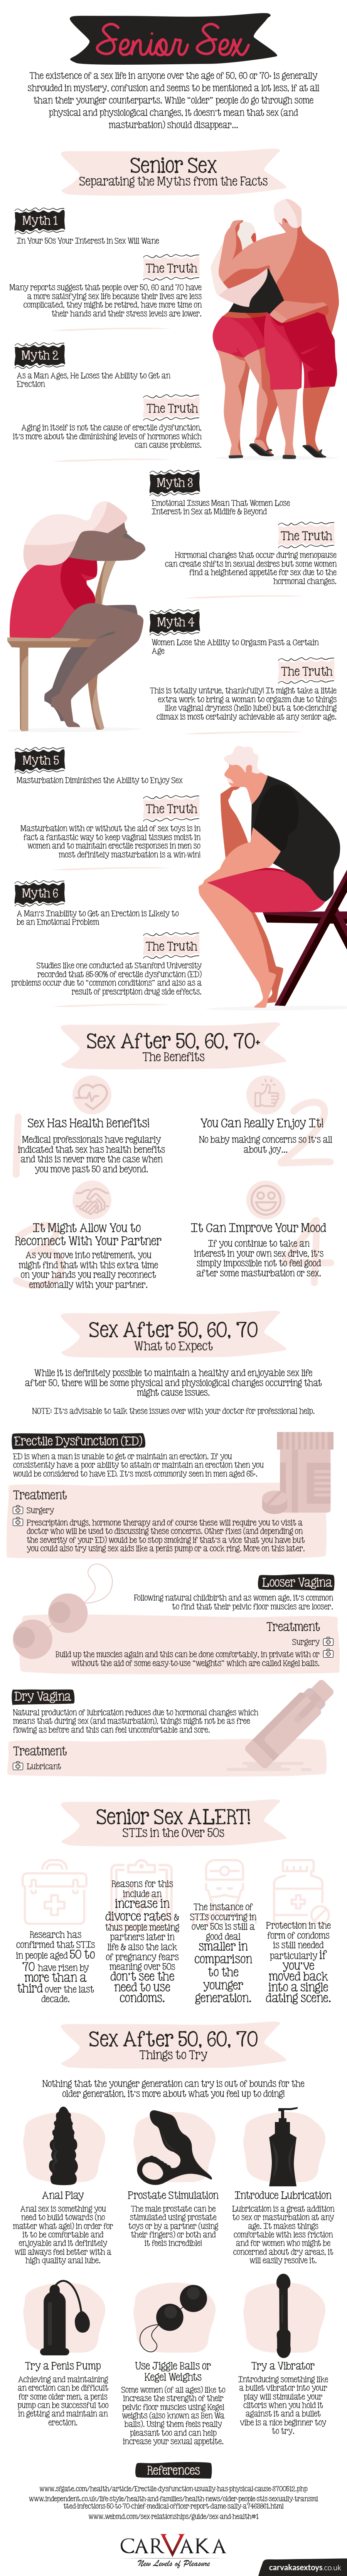 Senior-male-female-Sex-life-Infographic